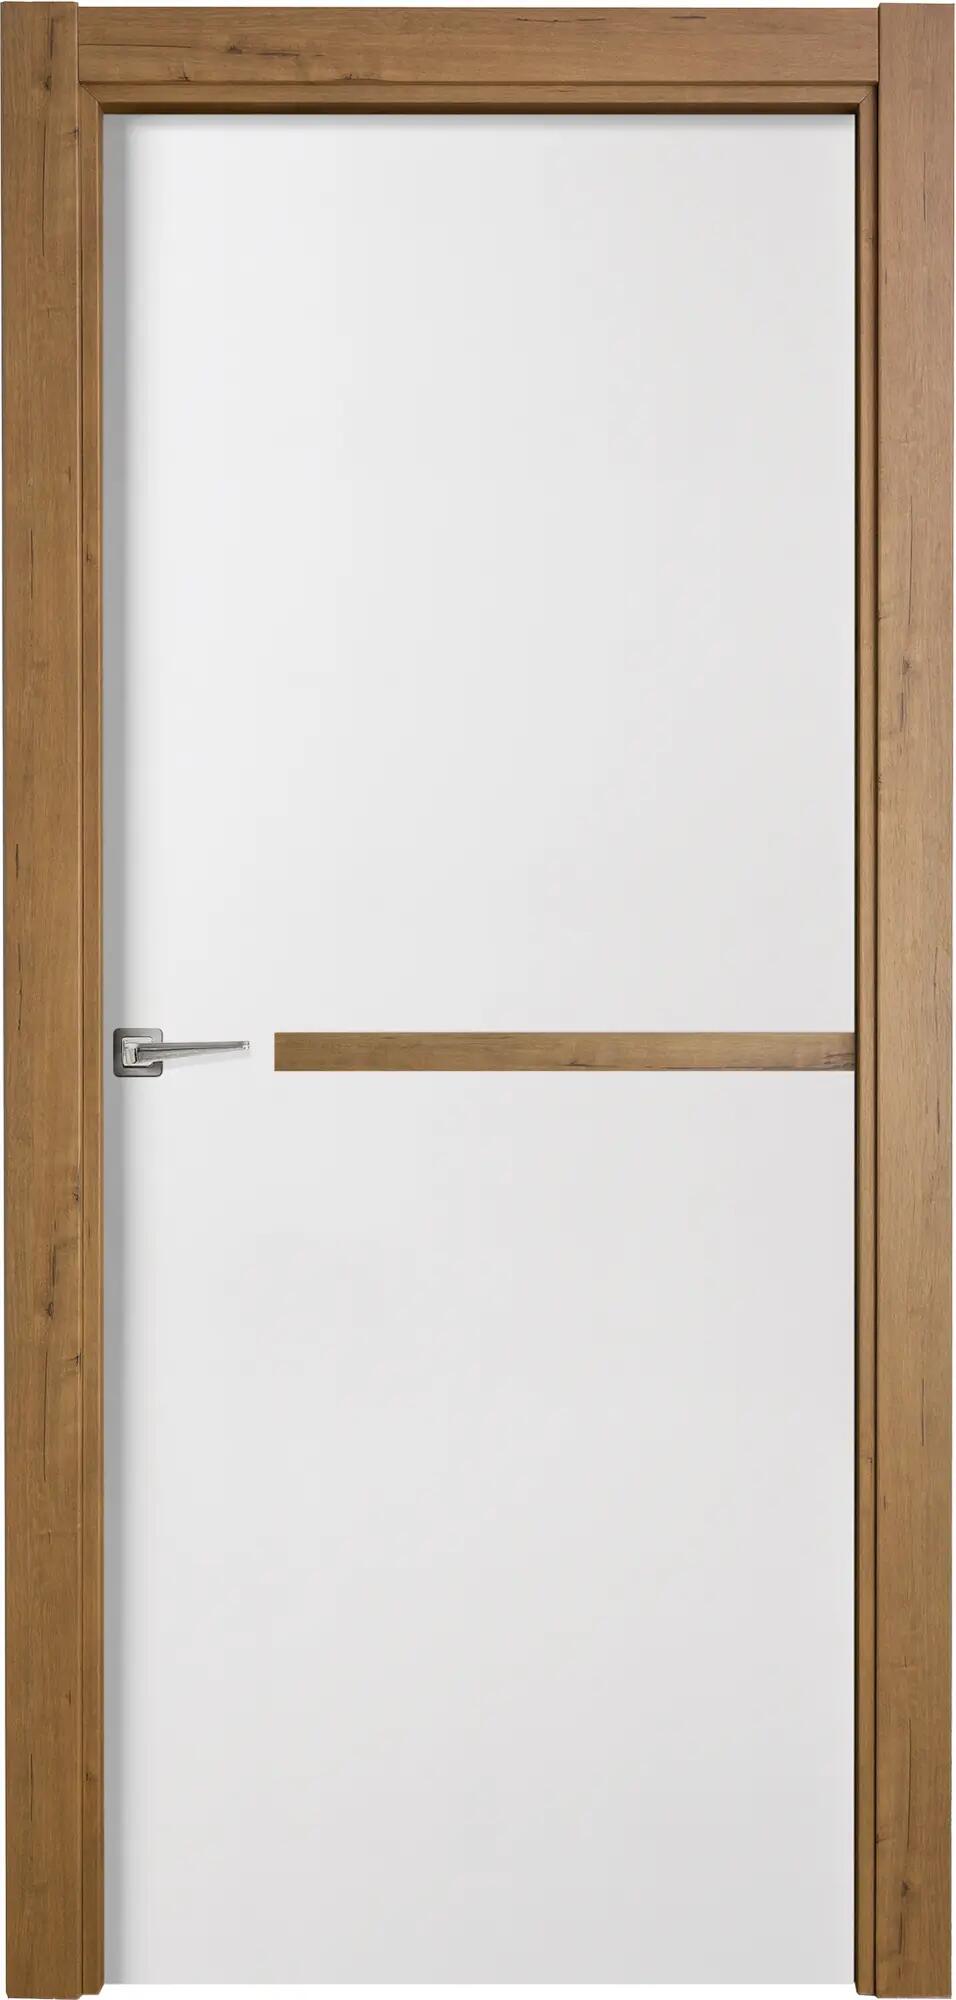 Puerta denver c-gold blanco apertura izquierda de 11x82.5 cm